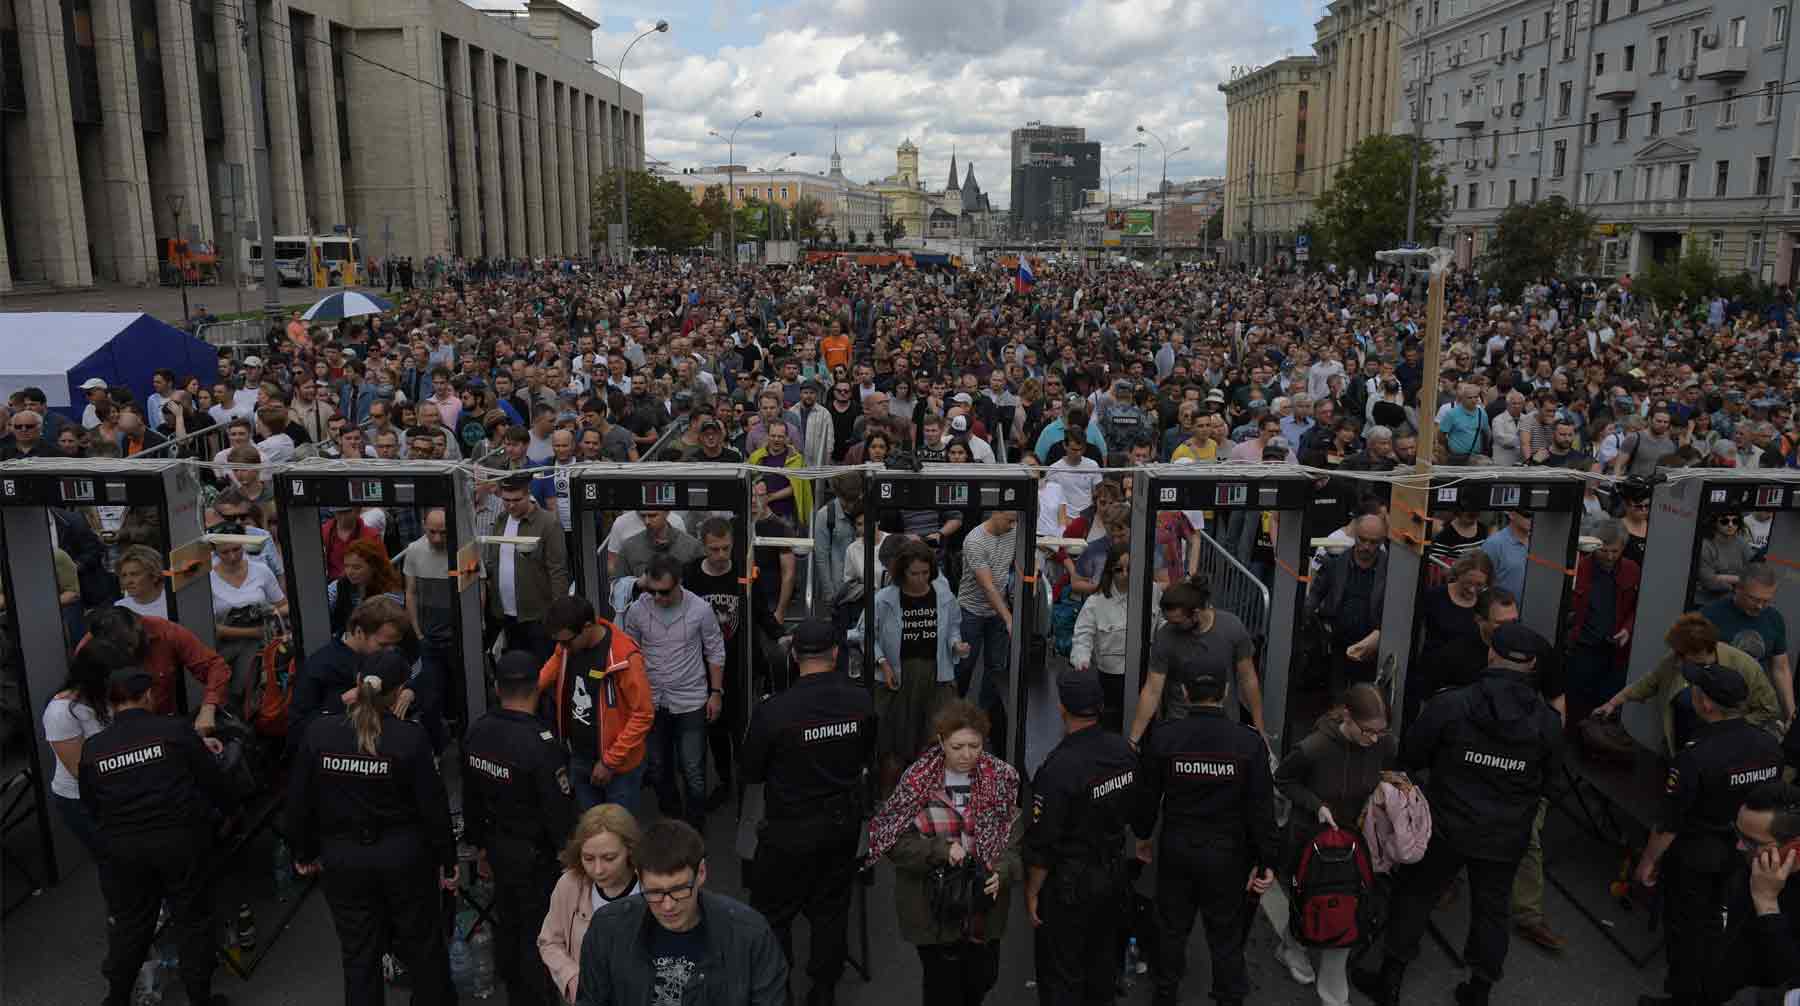 Мероприятие 10 августа на проспекте Сахарова санкционировано властями, напомнили в ведомстве Фото: © GLOBAL LOOK Press